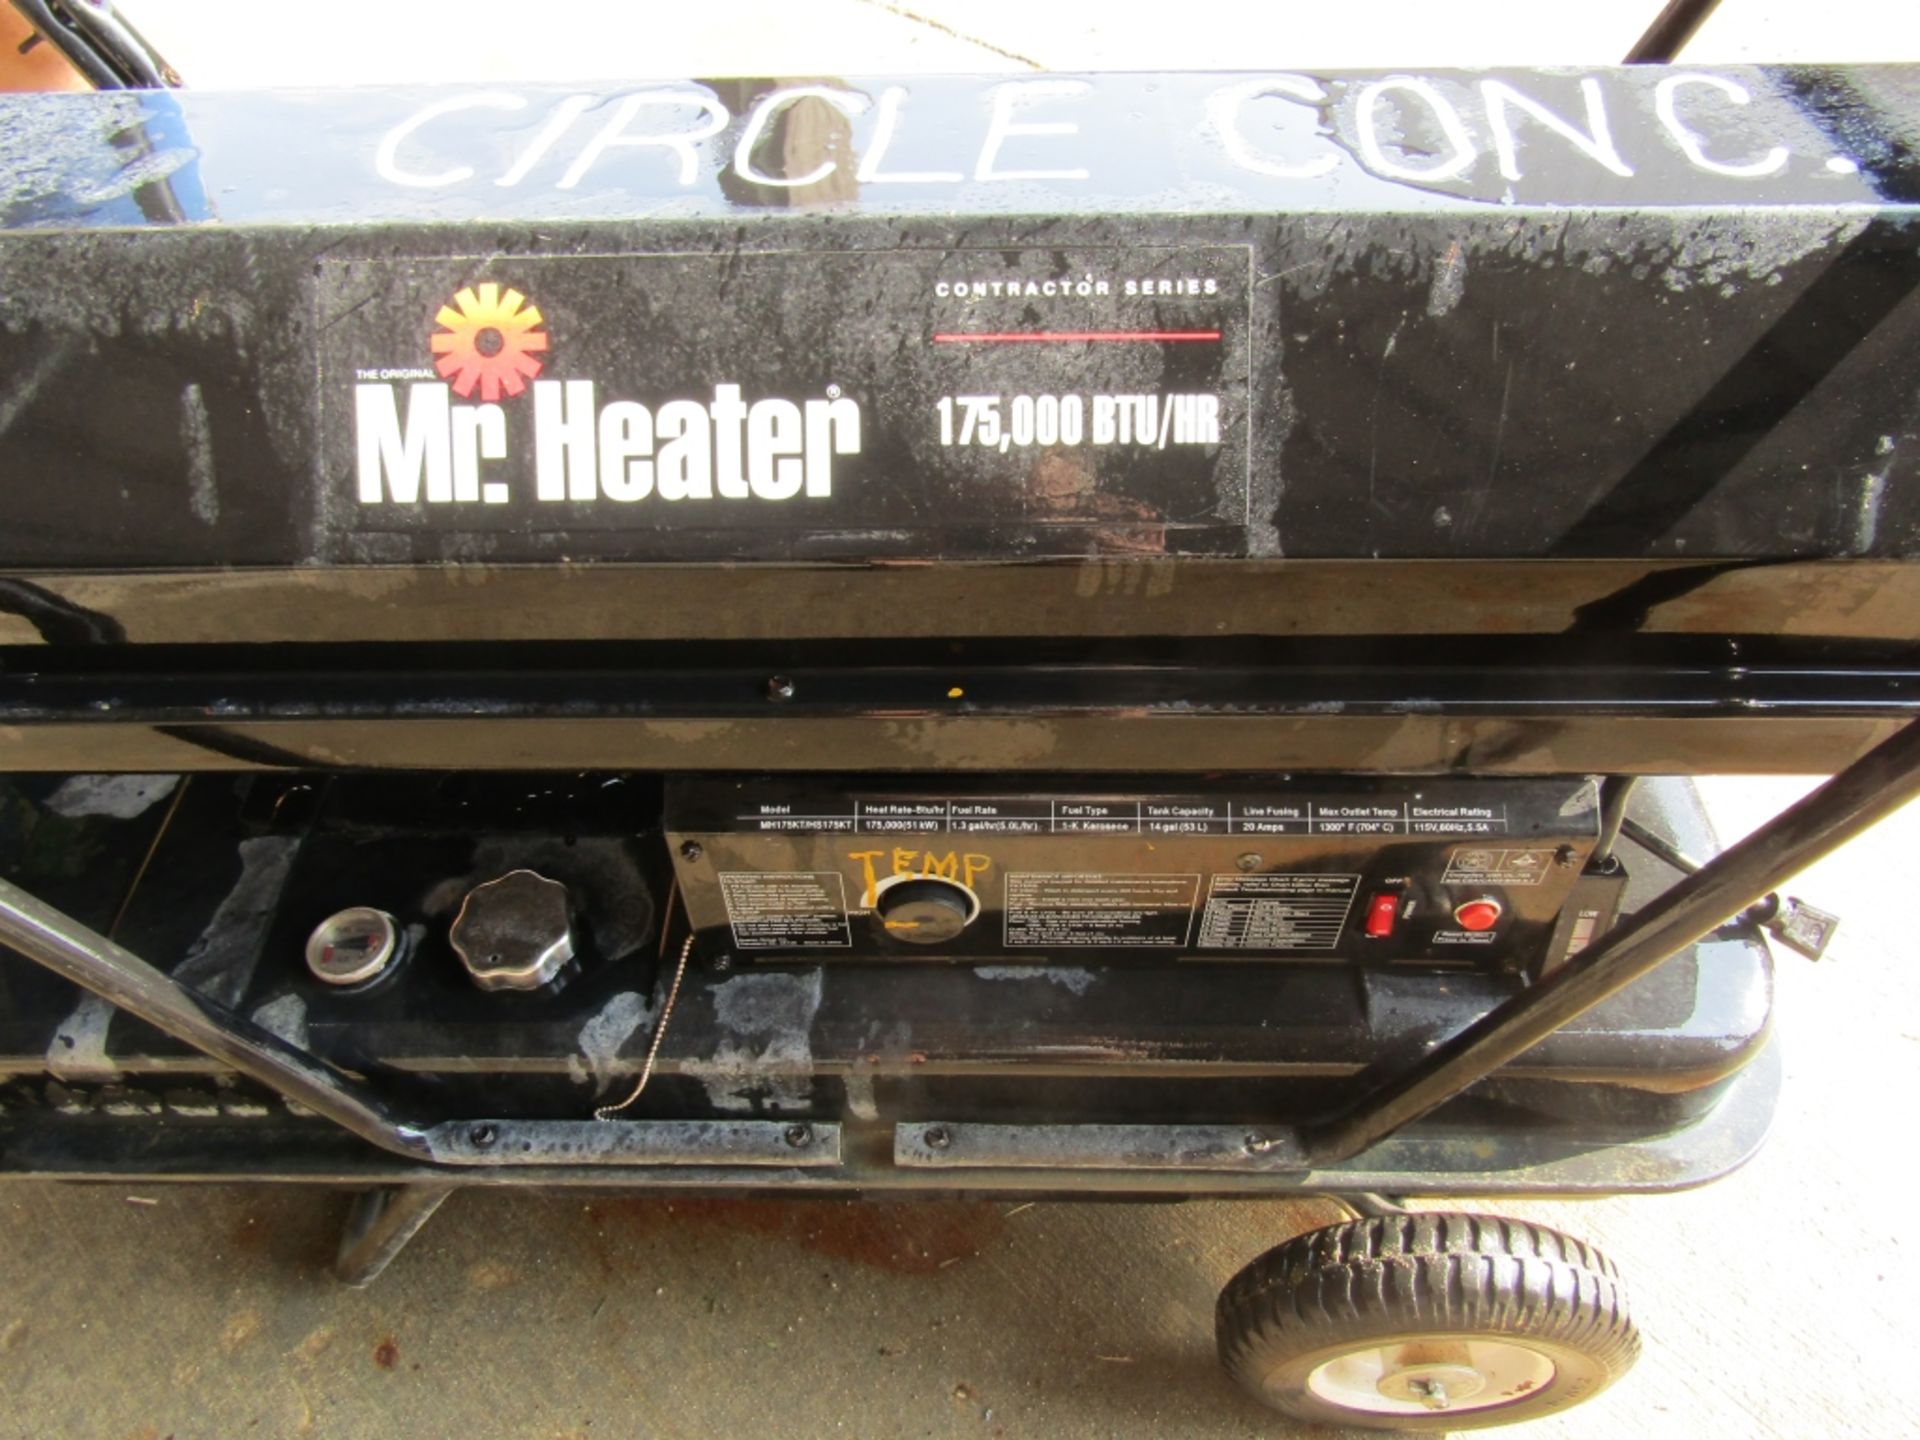 Mr. Heater Portable Heater, 175000 BTU/HR, - Image 2 of 2